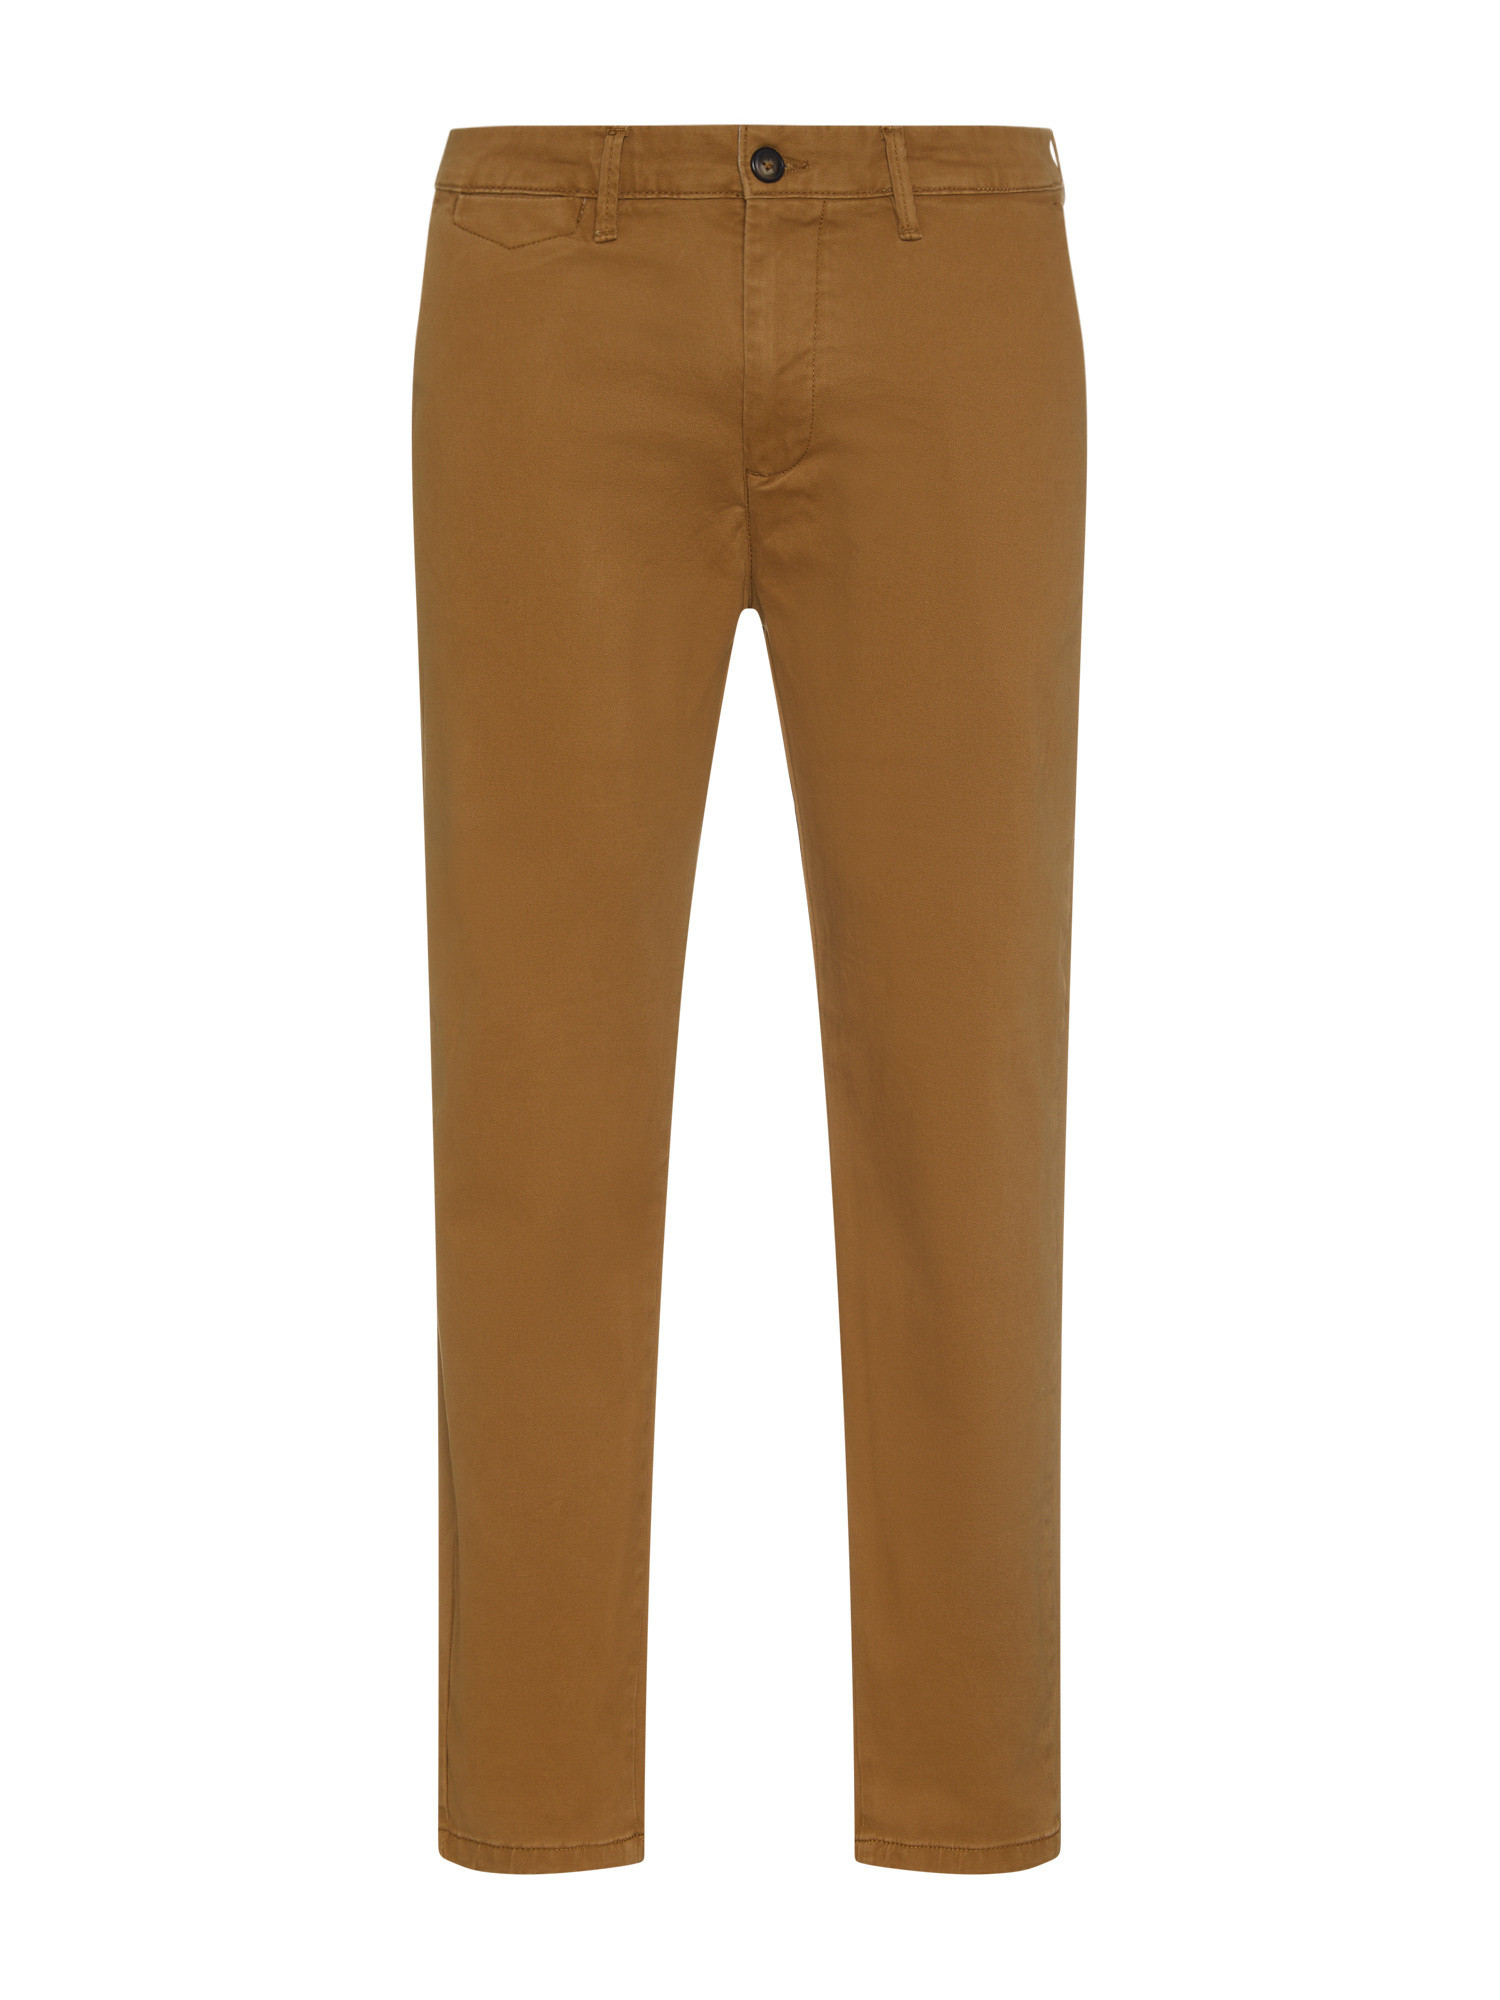 JCT - Pantaloni chino, Giallo scuro, large image number 0